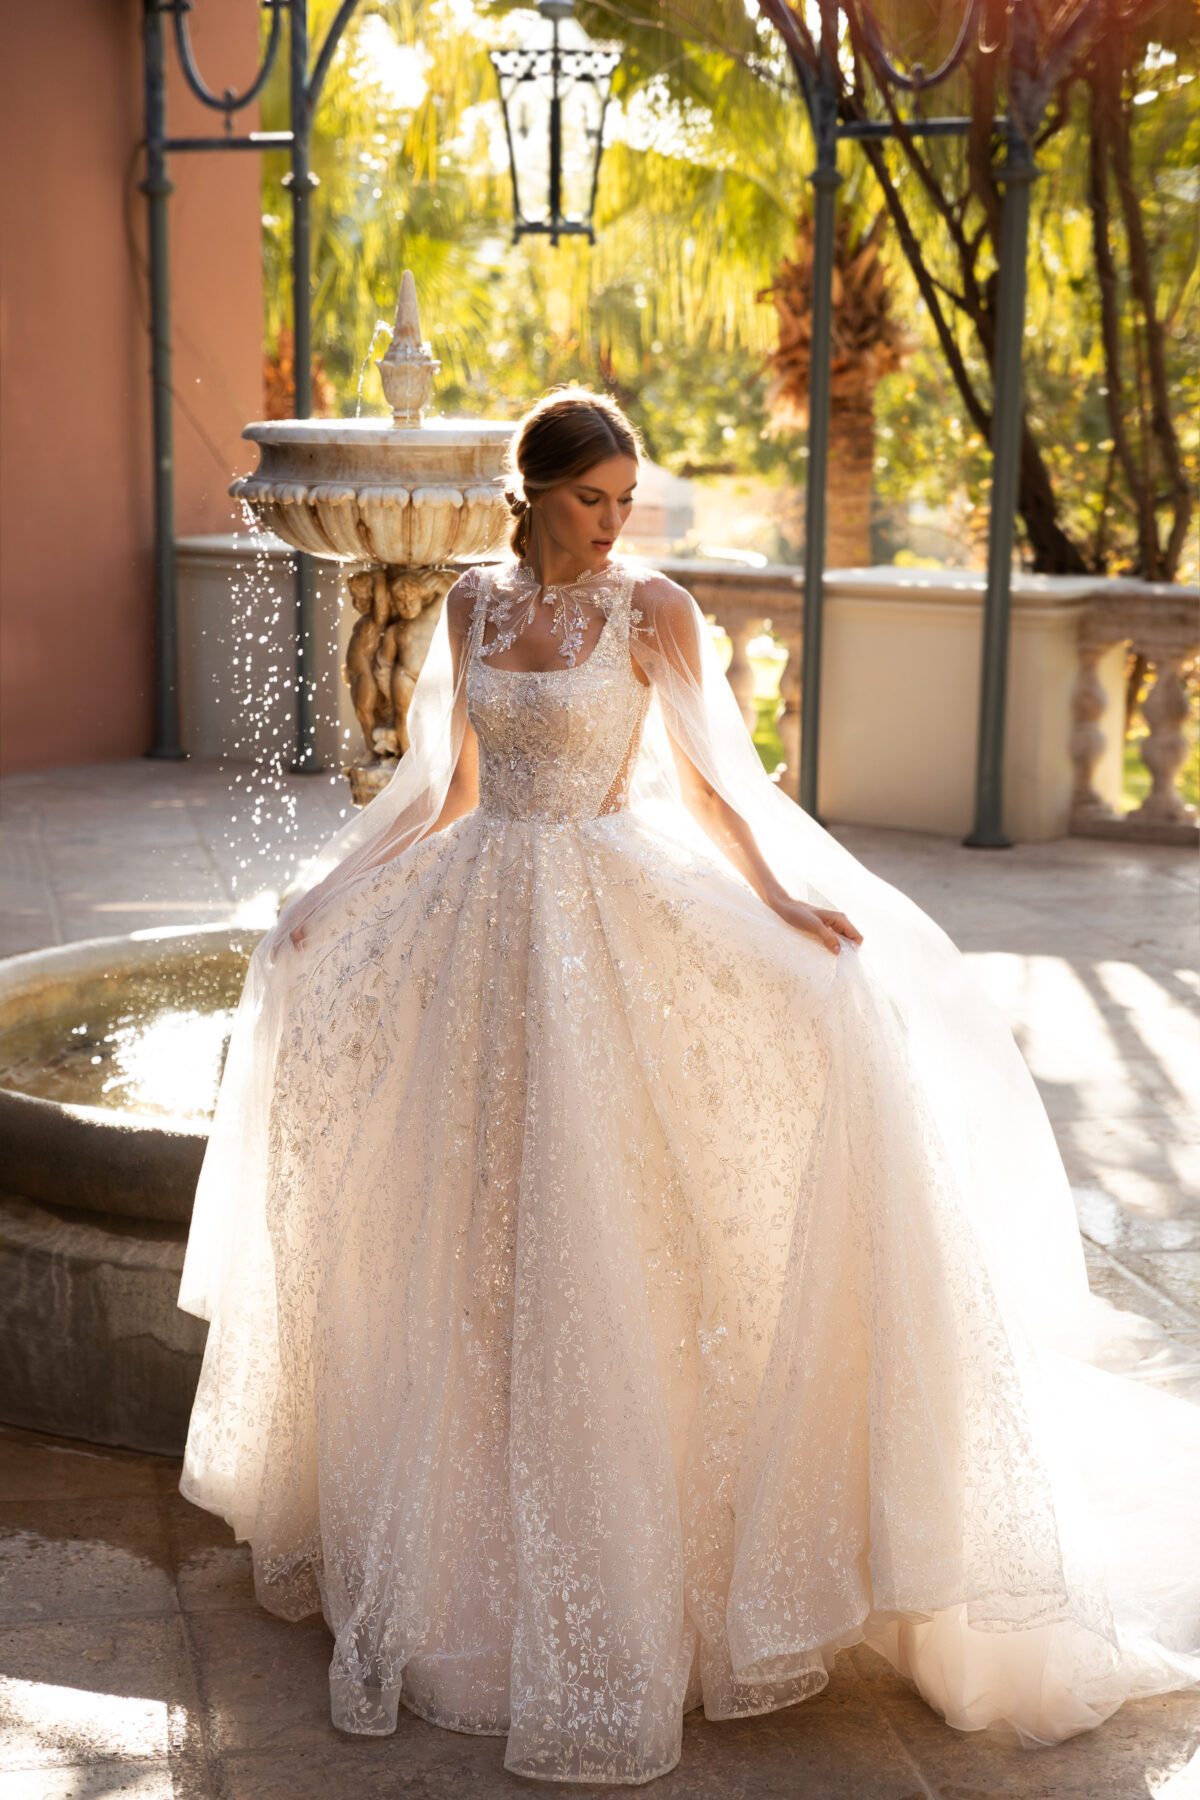 Hanni by Armonia wedding dress trends